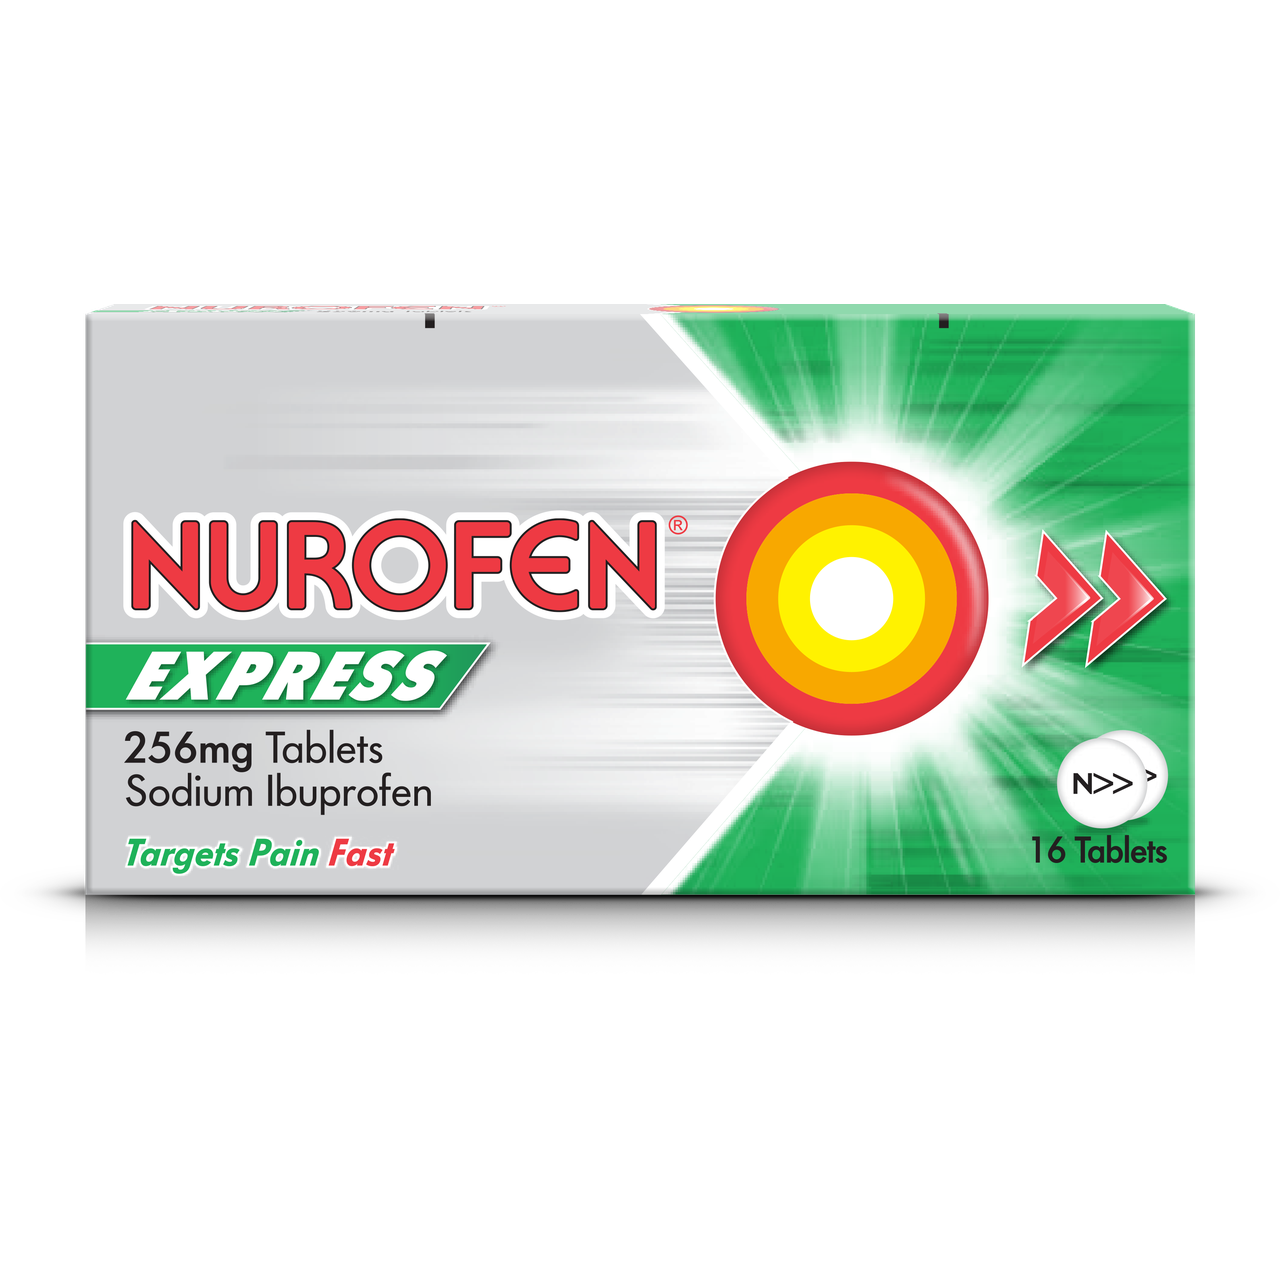 express-tablets-nurofen-pain-relief-period-pain-medication-nurofen